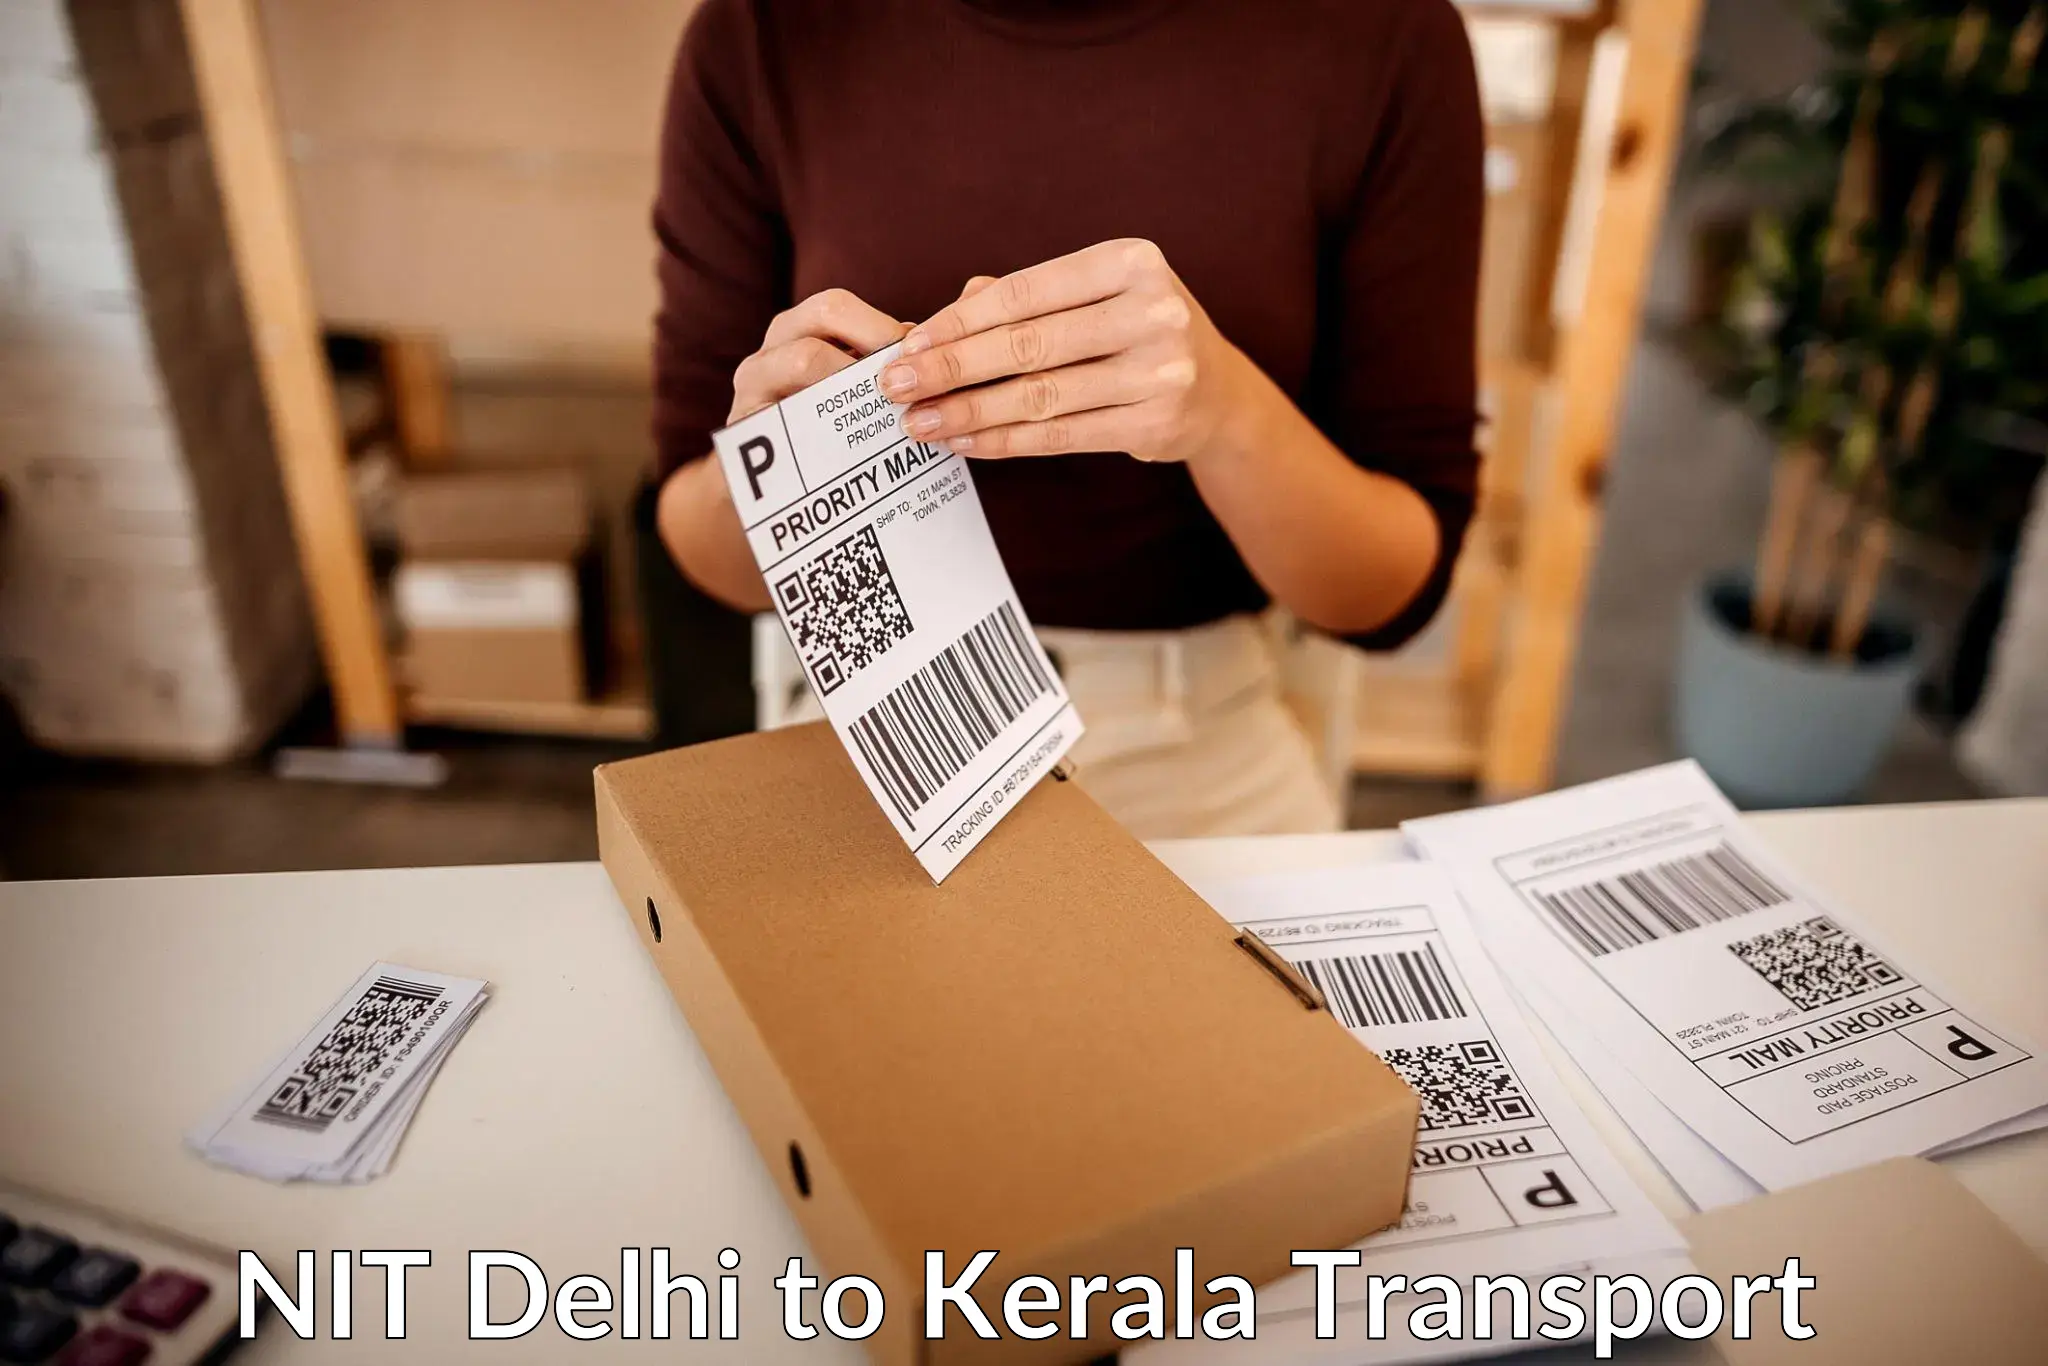 Daily transport service NIT Delhi to Cochin Port Kochi